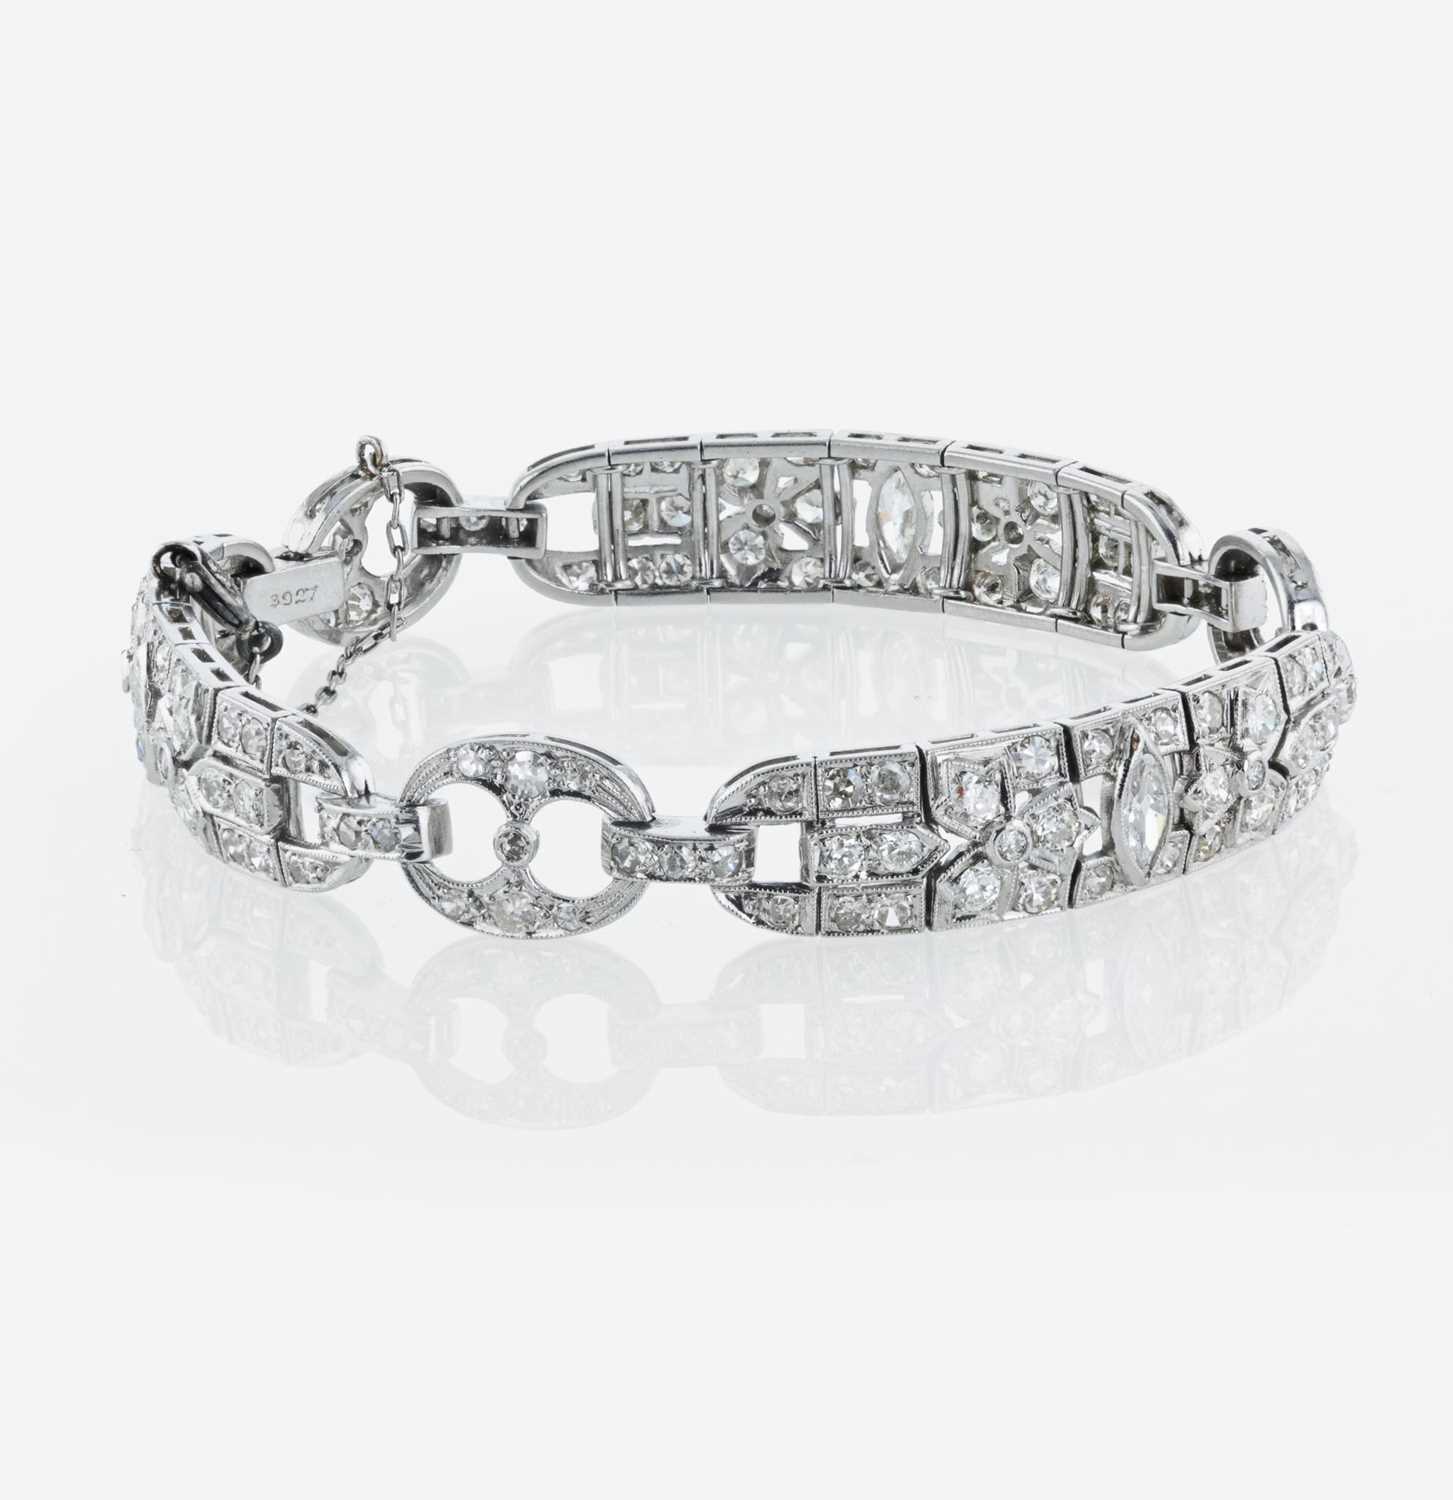 Lot 81 - An Art Deco platinum and diamond bracelet